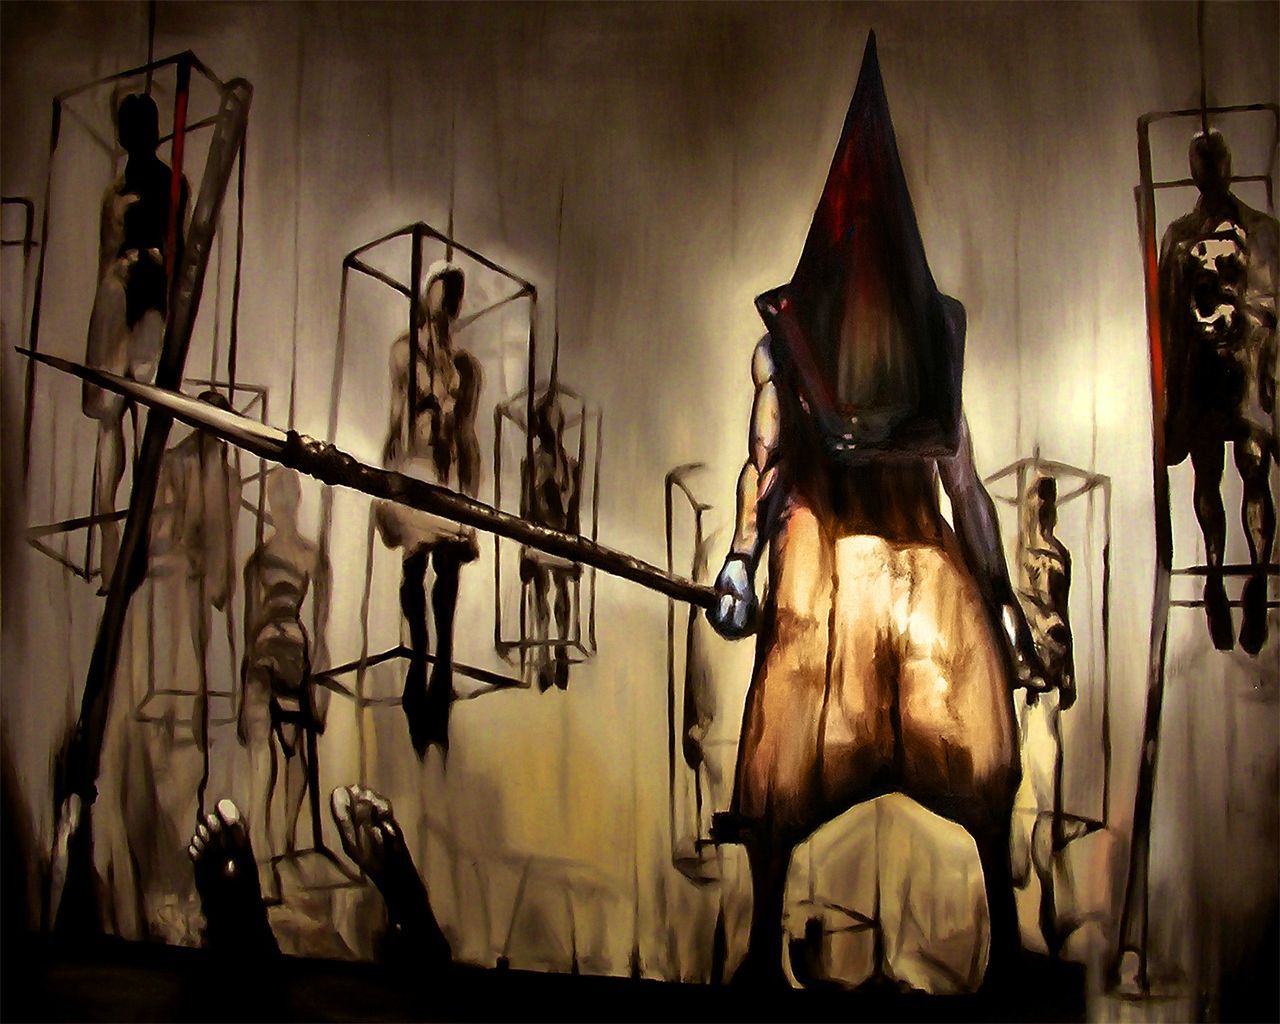 Arkade Art - Masahiro Ito, o criador das criaturas de Silent Hill